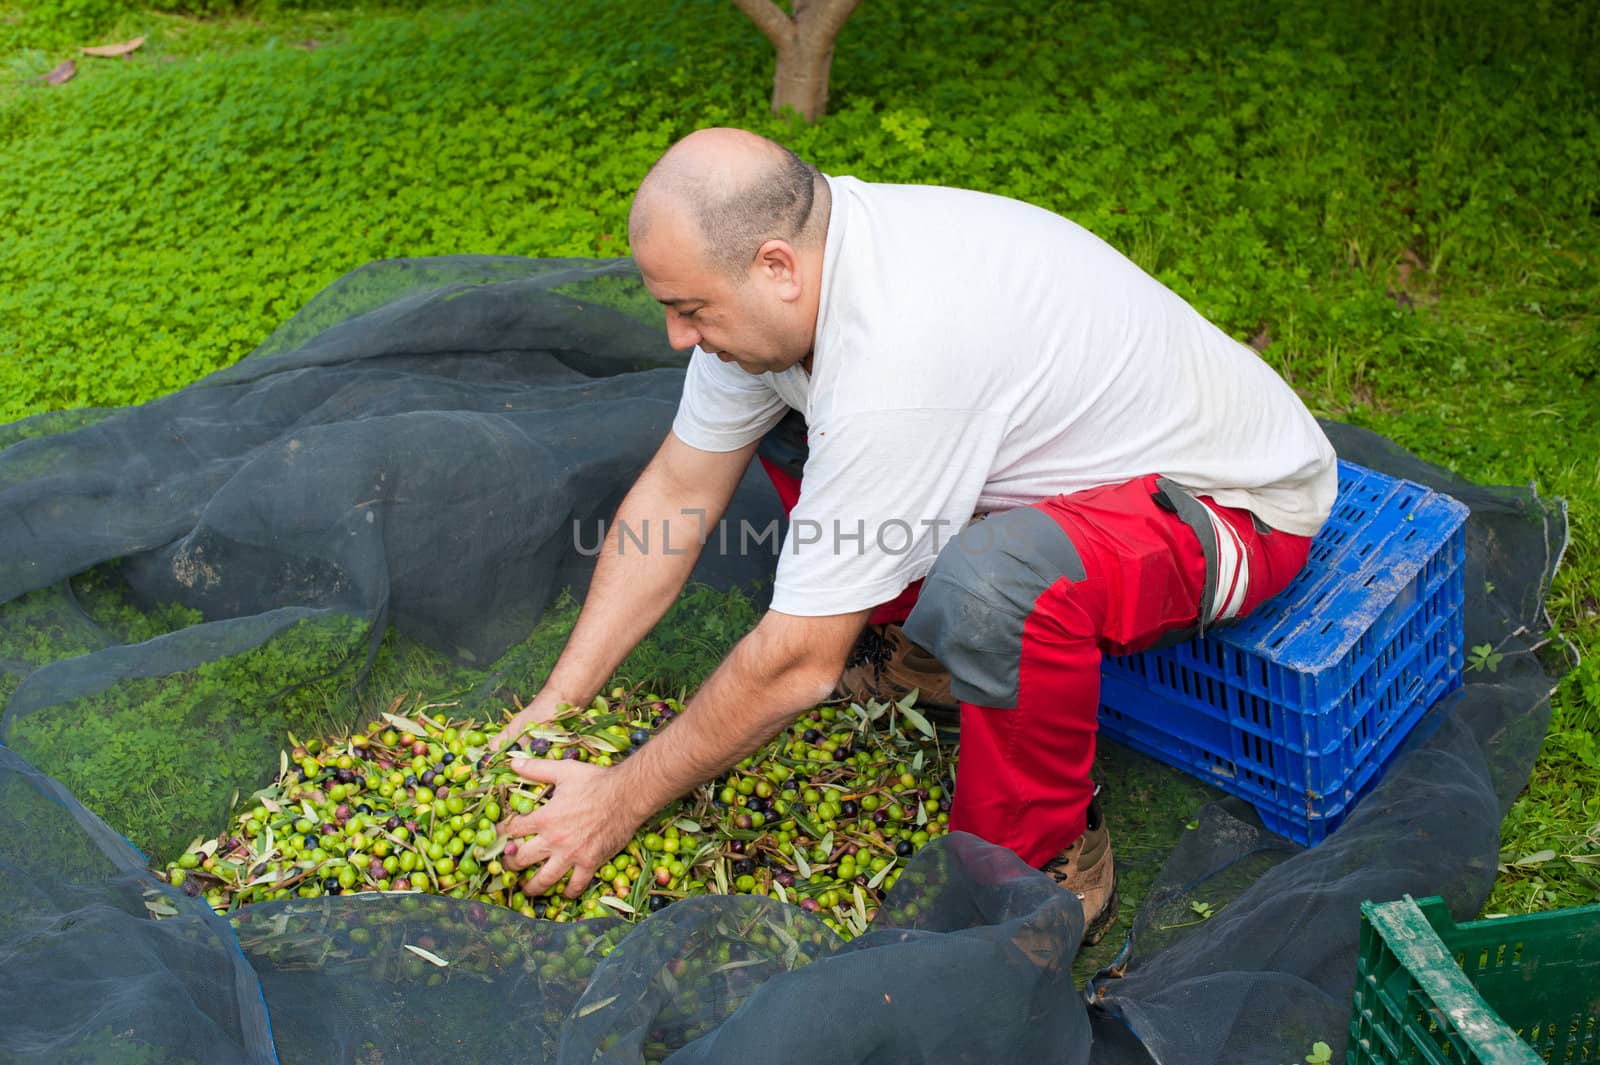 Picking olives by hemeroskopion